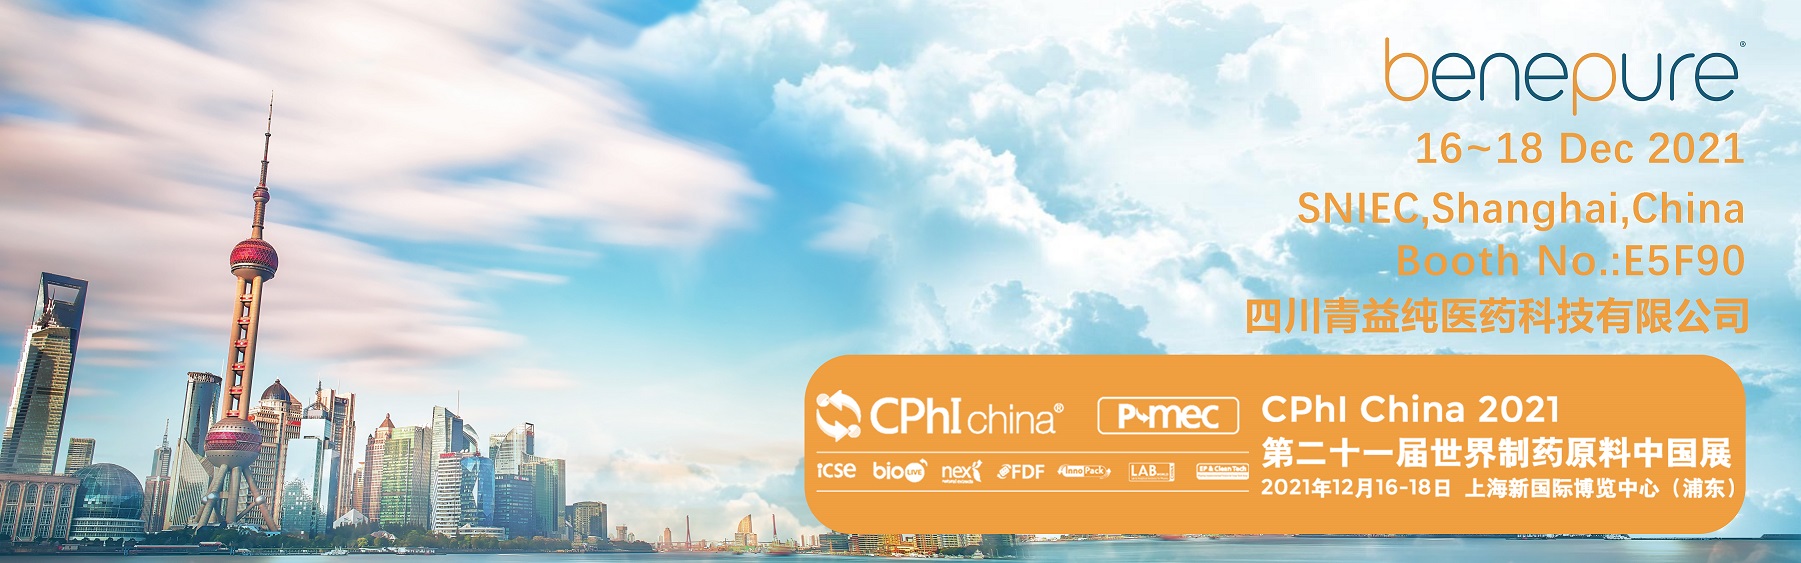 CPHI China 2021, SNIEC, Shanghai, China. (Booth No.: E5F90),